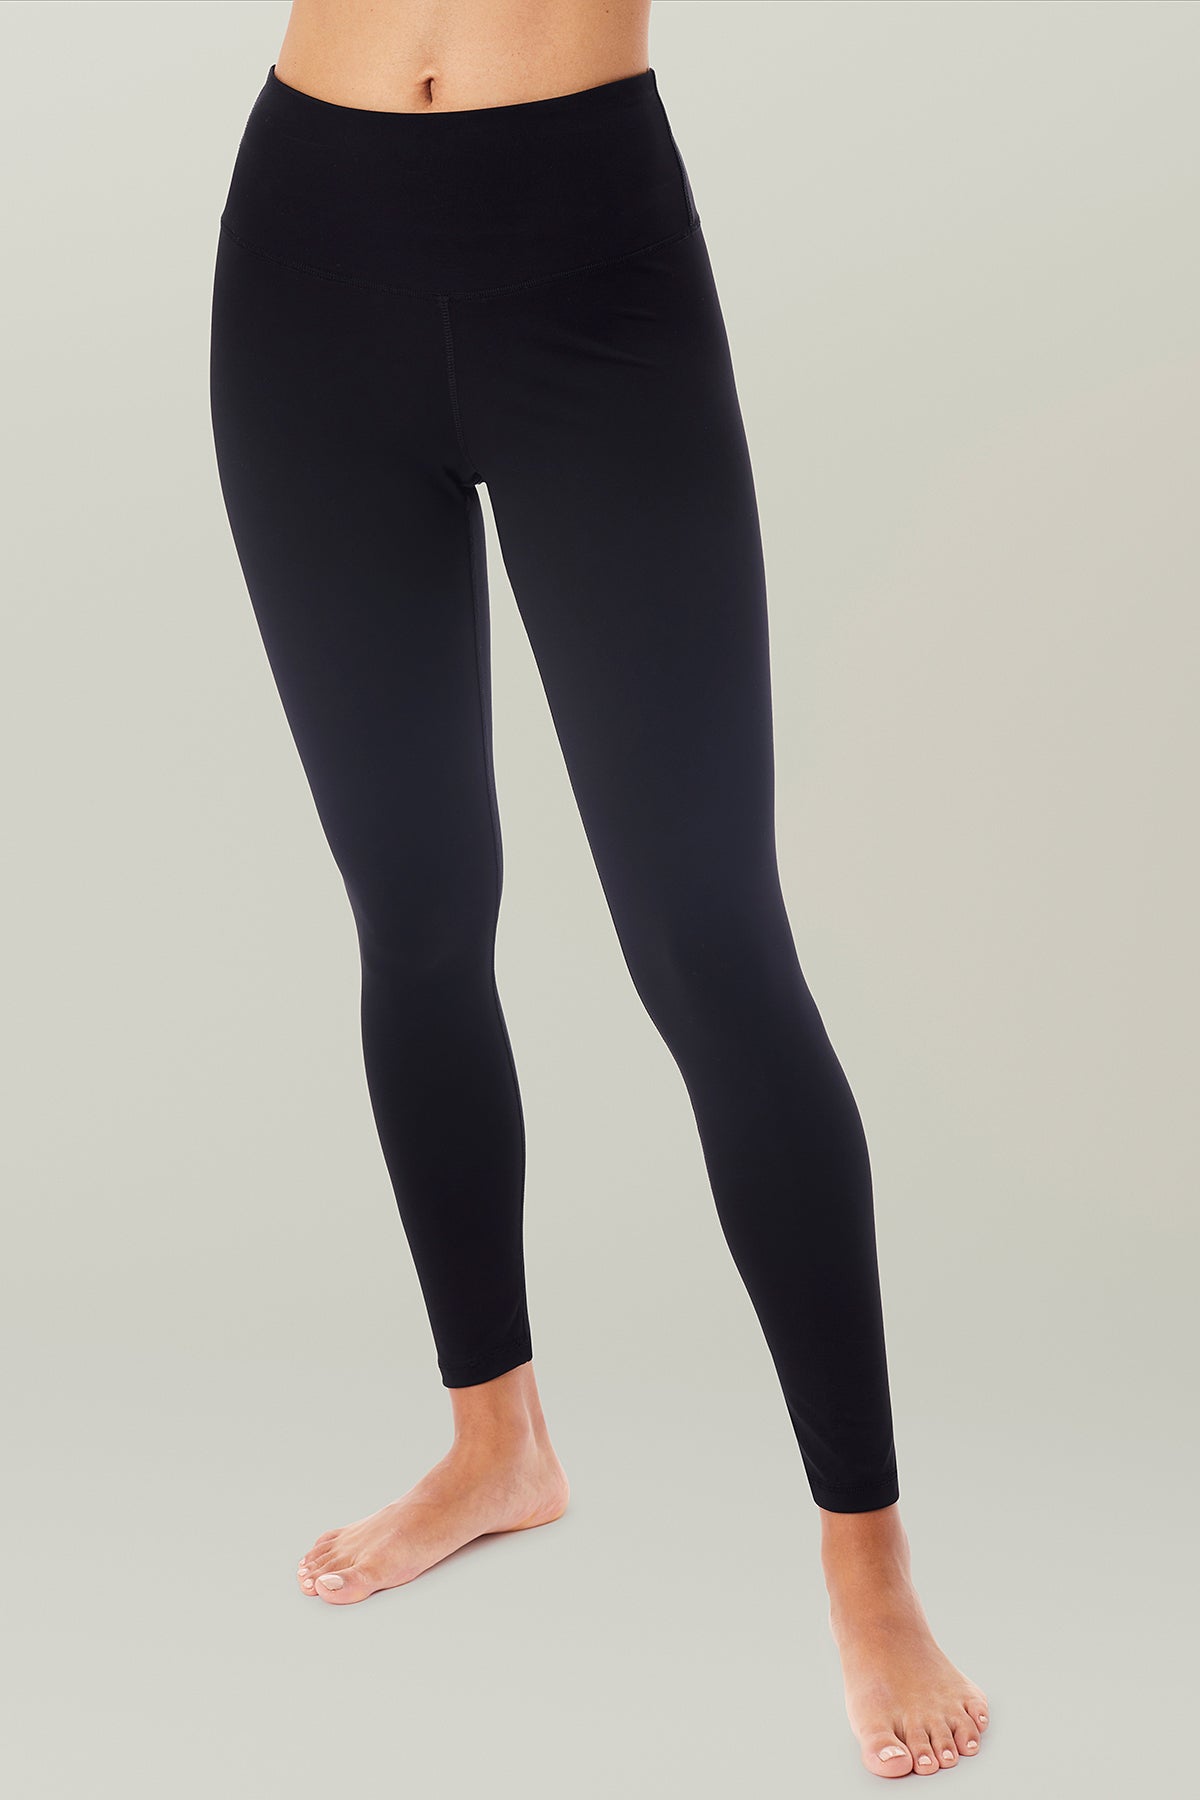 Sustainable yoga pants for curvy women by MANDALA